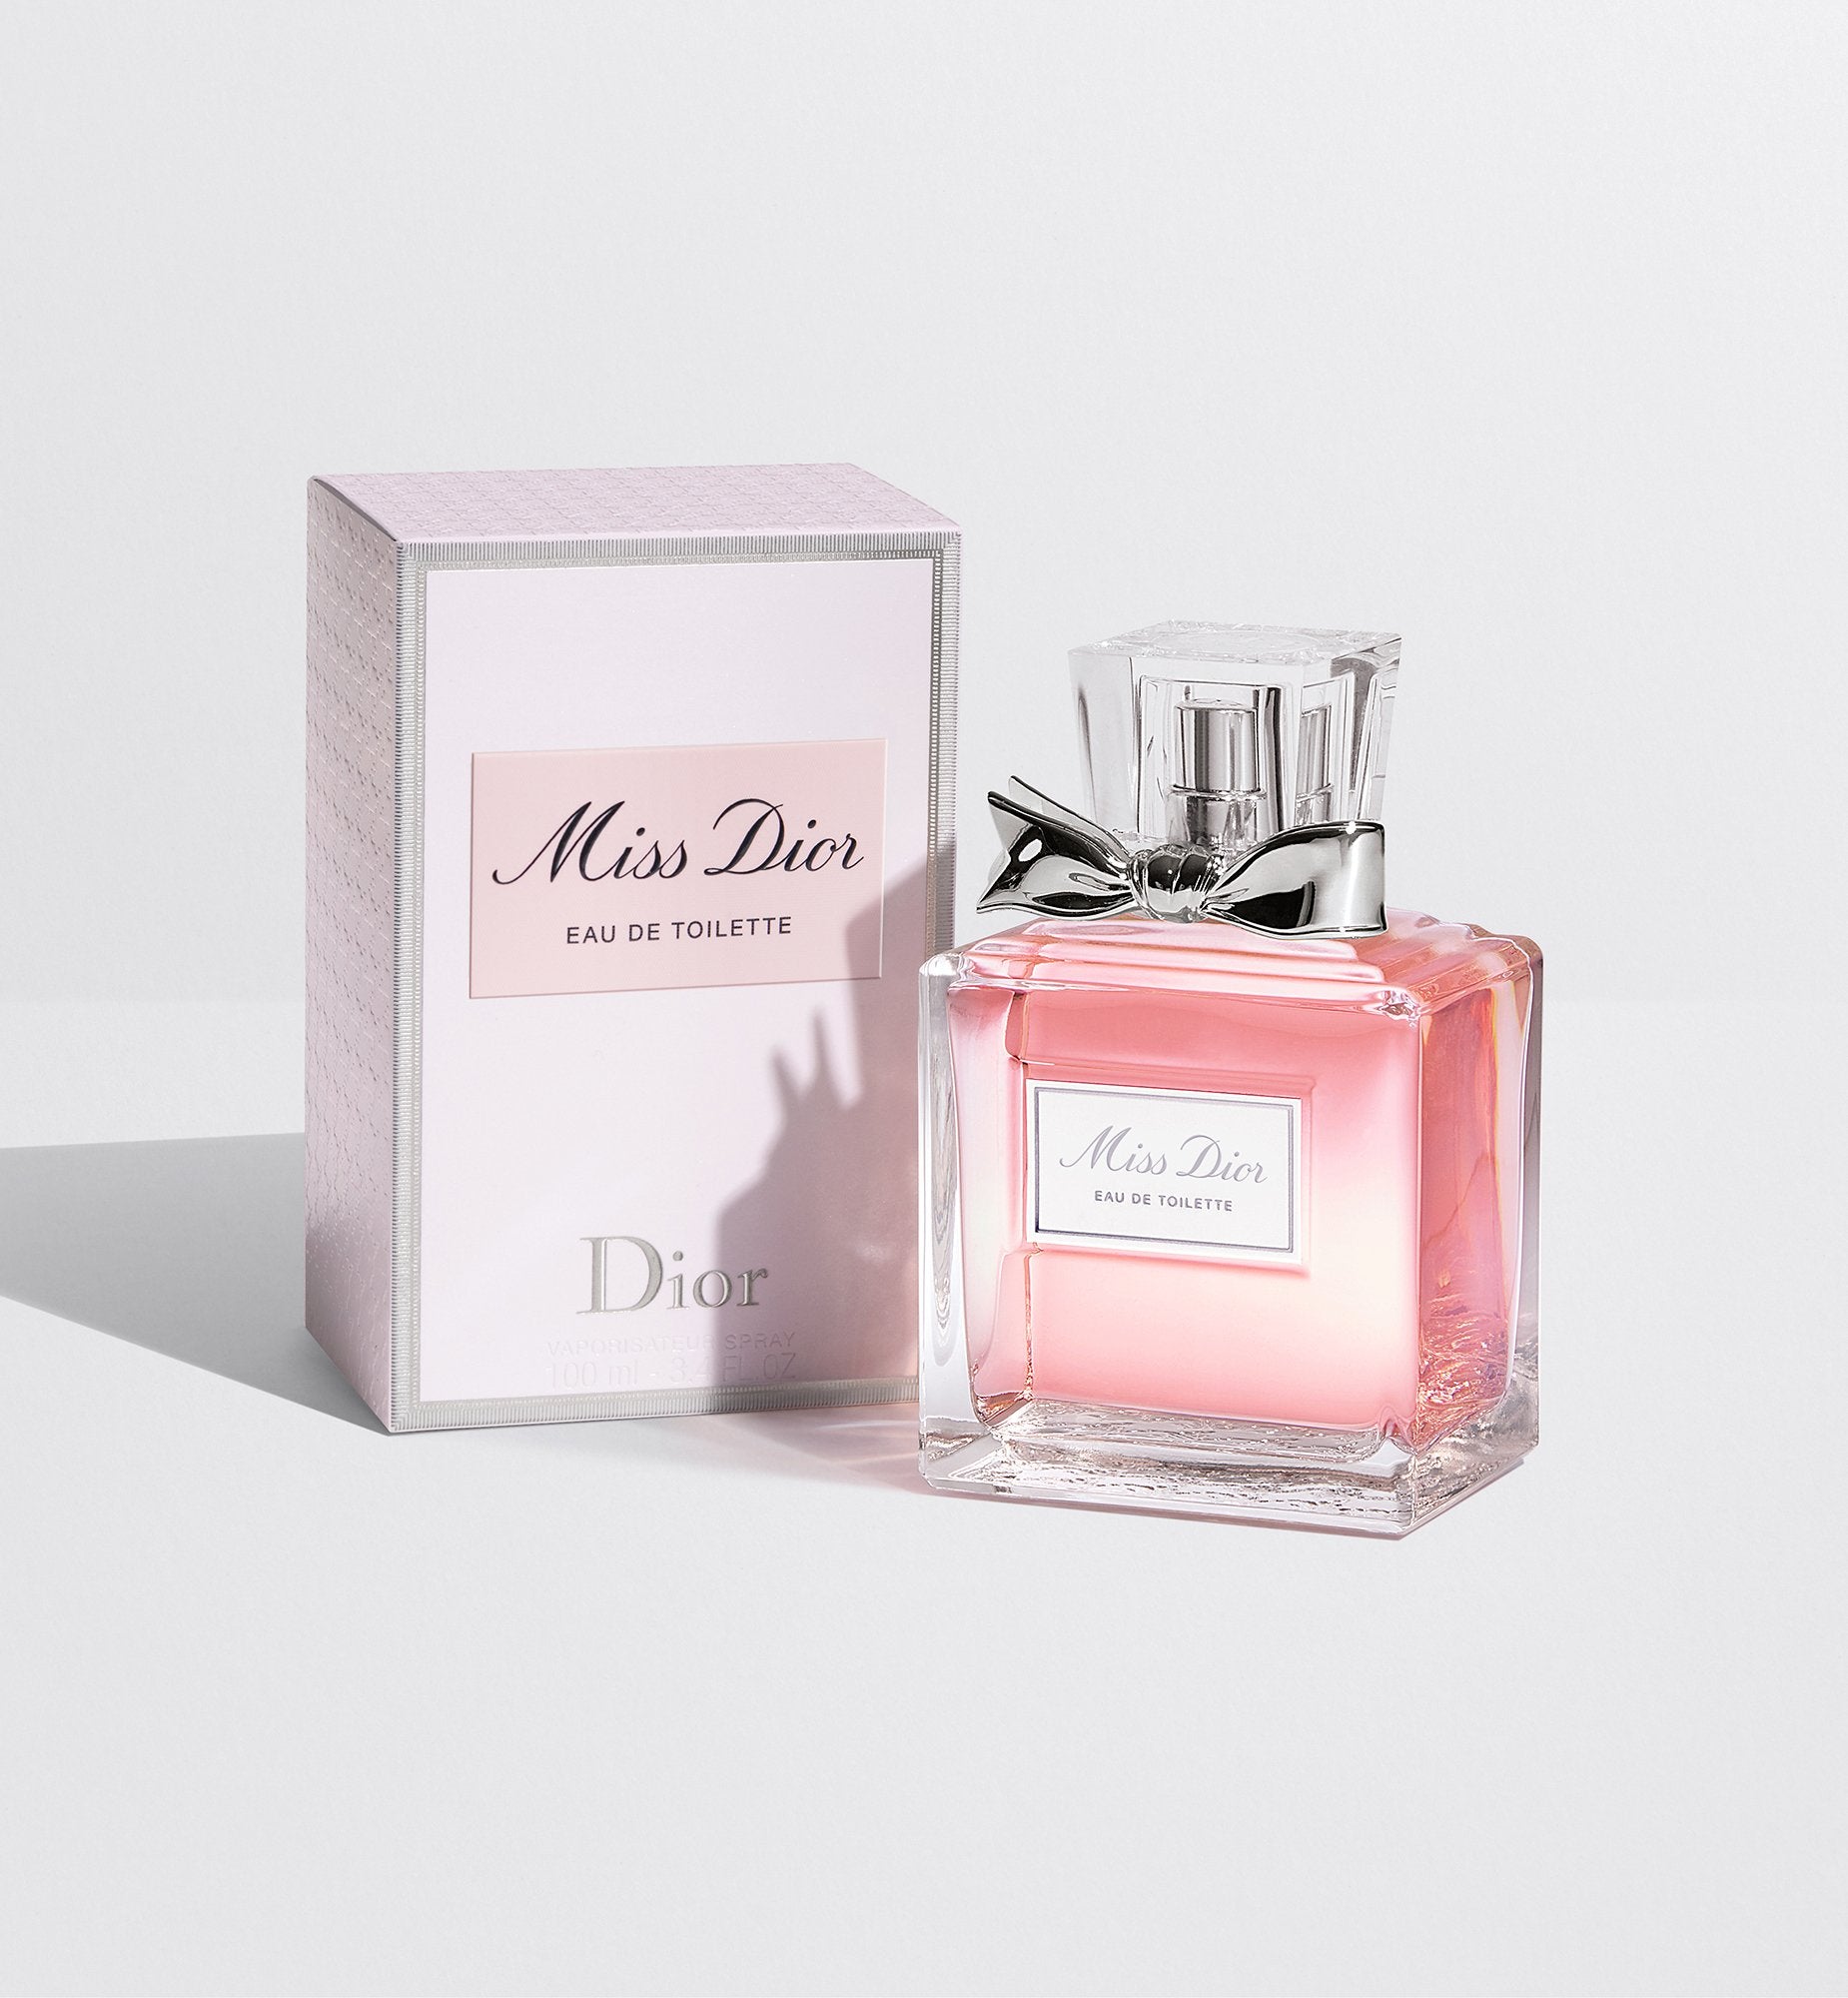 Dior 3.4 oz. Miss Dior Eau de Parfum